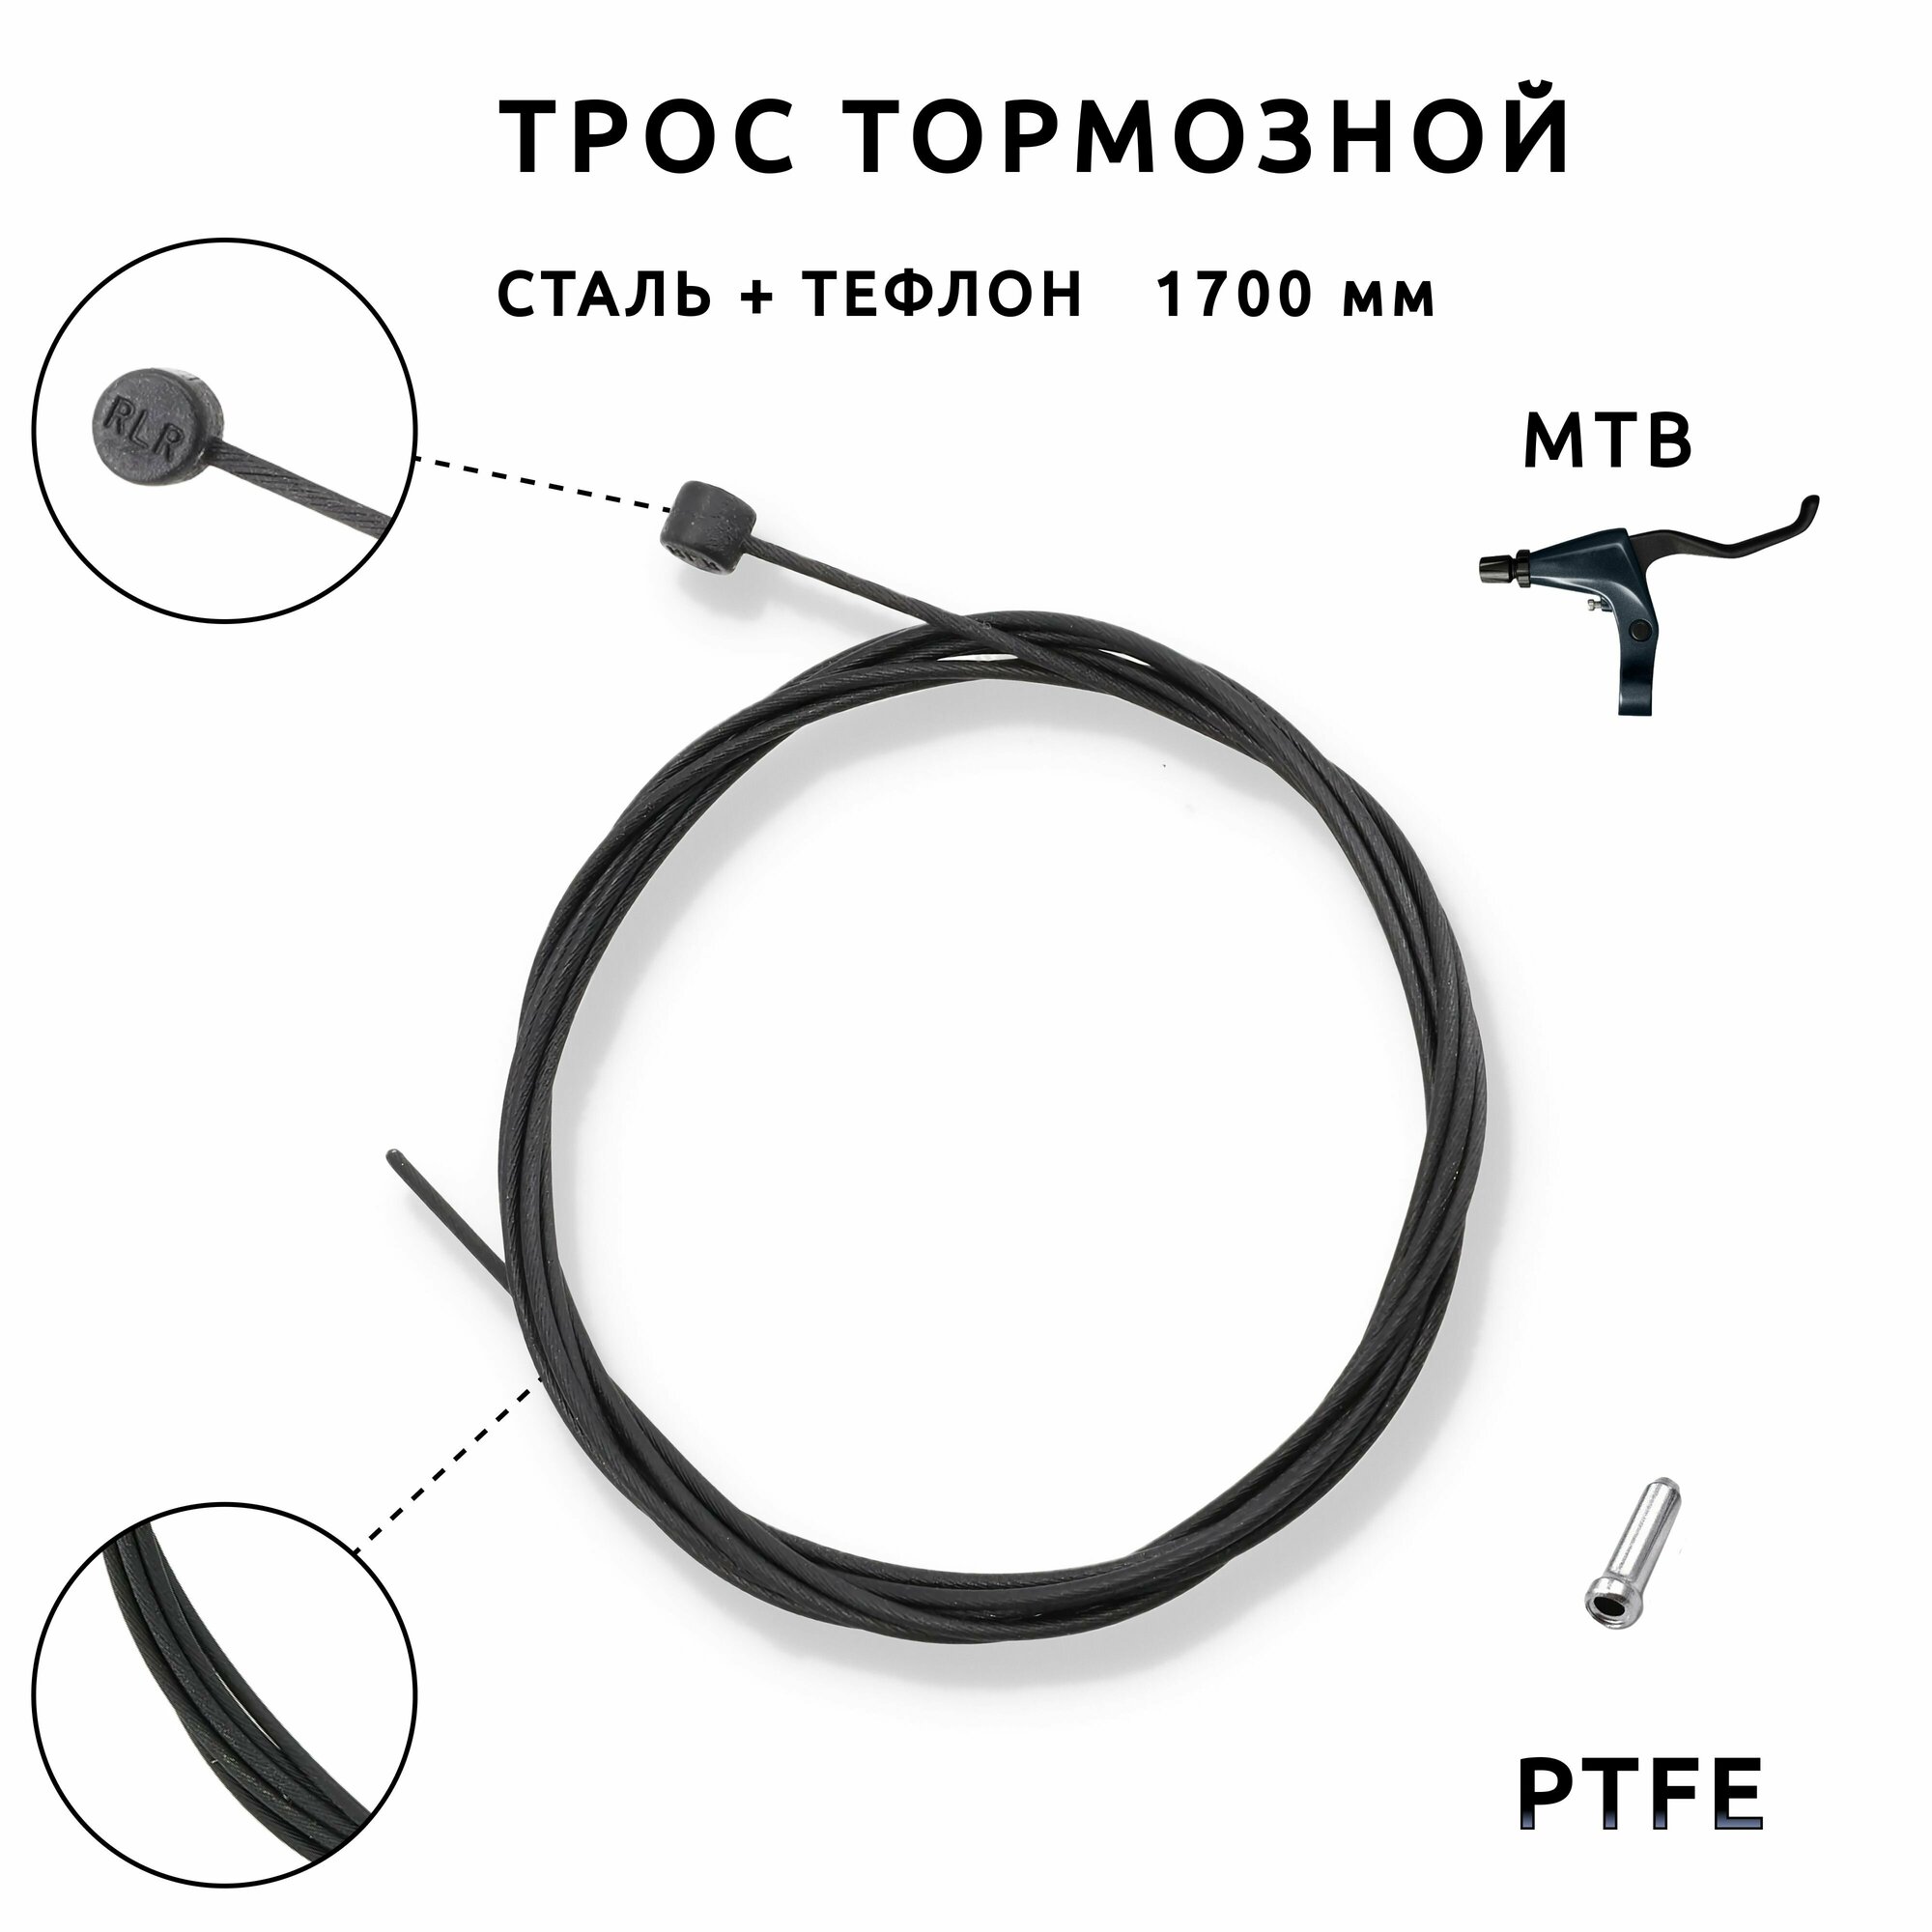 Трос тормозной MTB с тефлоном Brake Cable Teflon Slick, передний или задний 1700 мм, сталь